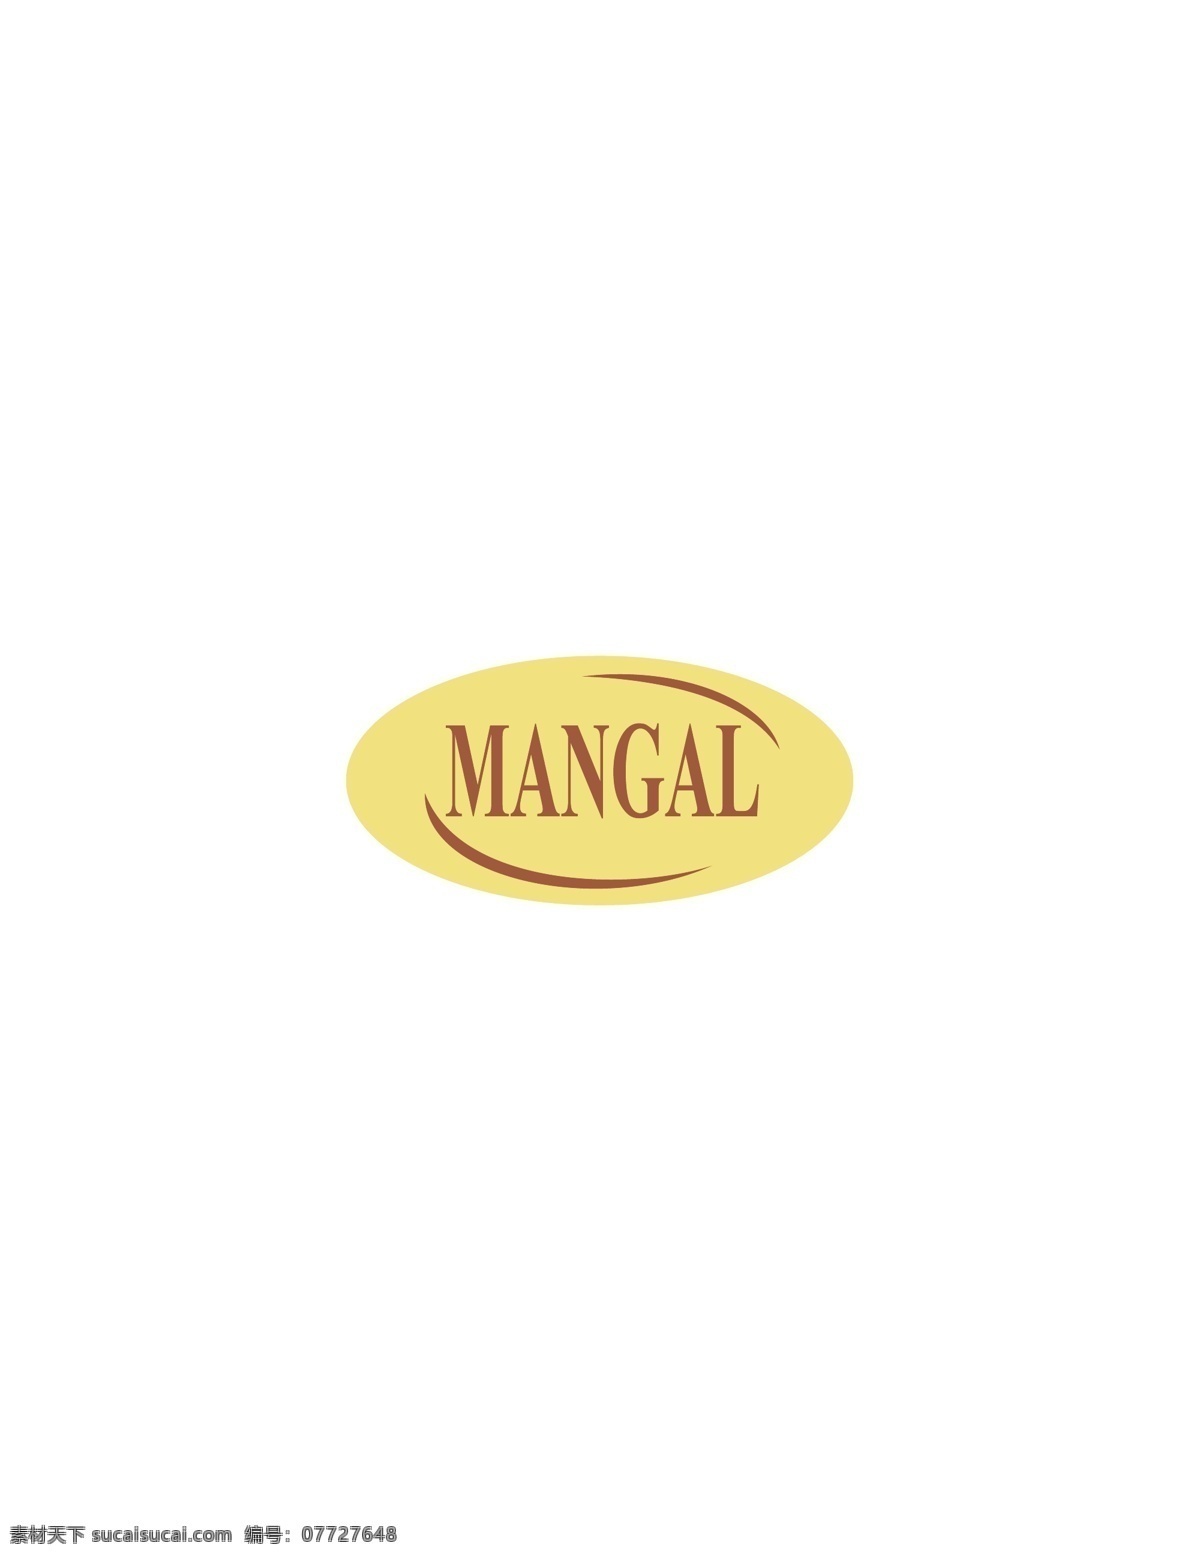 logo大全 logo 设计欣赏 商业矢量 矢量下载 mangalrestaurant 食物 品牌 标志 标志设计 欣赏 网页矢量 矢量图 其他矢量图